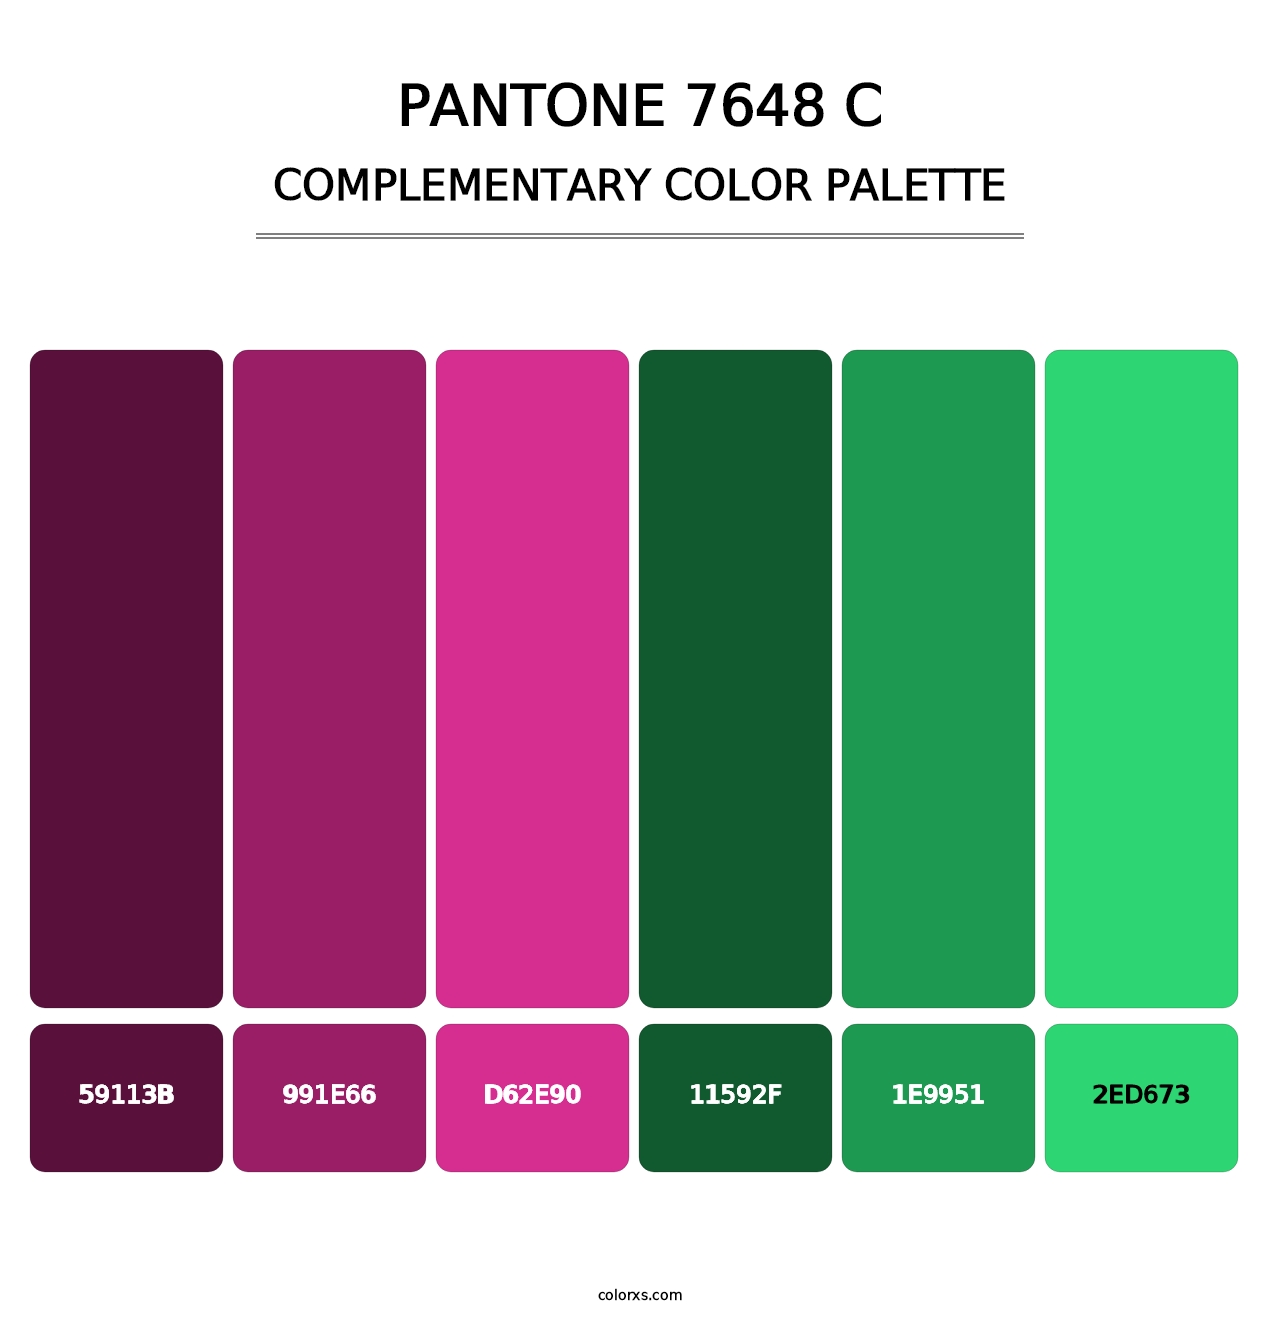 PANTONE 7648 C - Complementary Color Palette